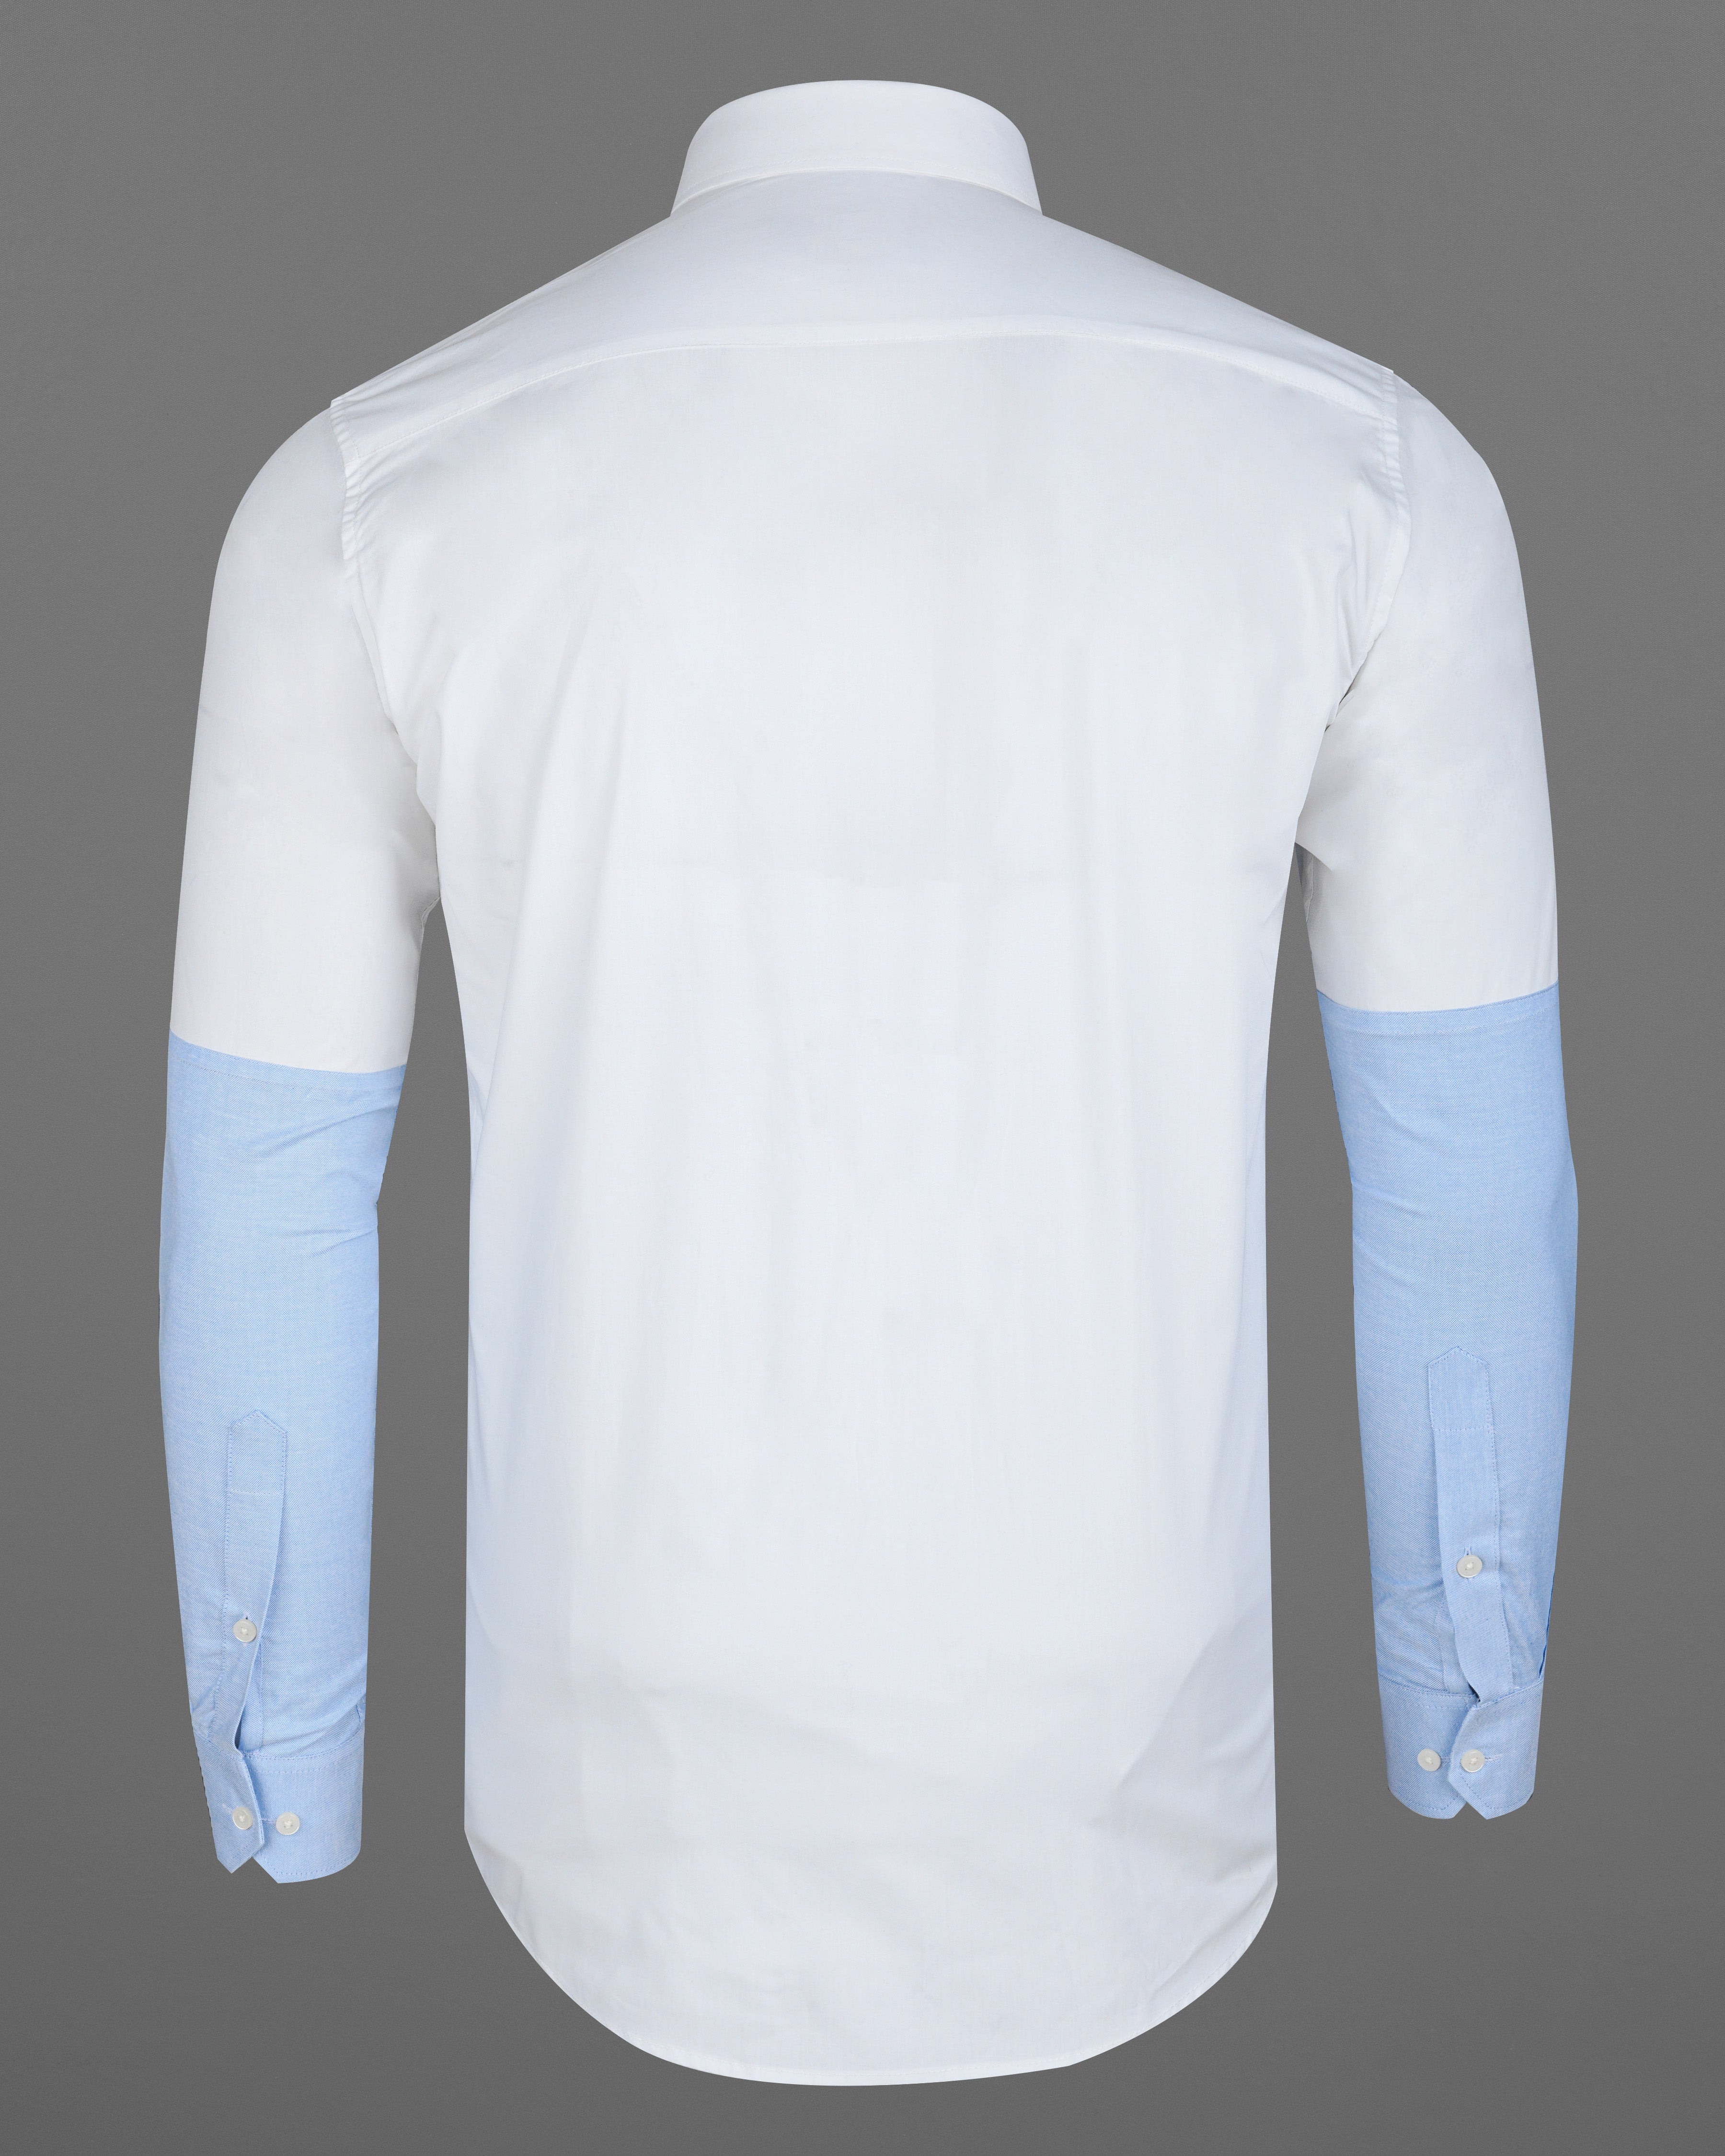 Bright White and Spindle Blue Half Coloured Sleeves Premium Cotton Designer Shirt 8168-P204-38, 8168-P204-H-38, 8168-P204-39, 8168-P204-H-39, 8168-P204-40, 8168-P204-H-40, 8168-P204-42, 8168-P204-H-42, 8168-P204-44, 8168-P204-H-44, 8168-P204-46, 8168-P204-H-46, 8168-P204-48, 8168-P204-H-48, 8168-P204-50, 8168-P204-H-50, 8168-P204-52, 8168-P204-H-52